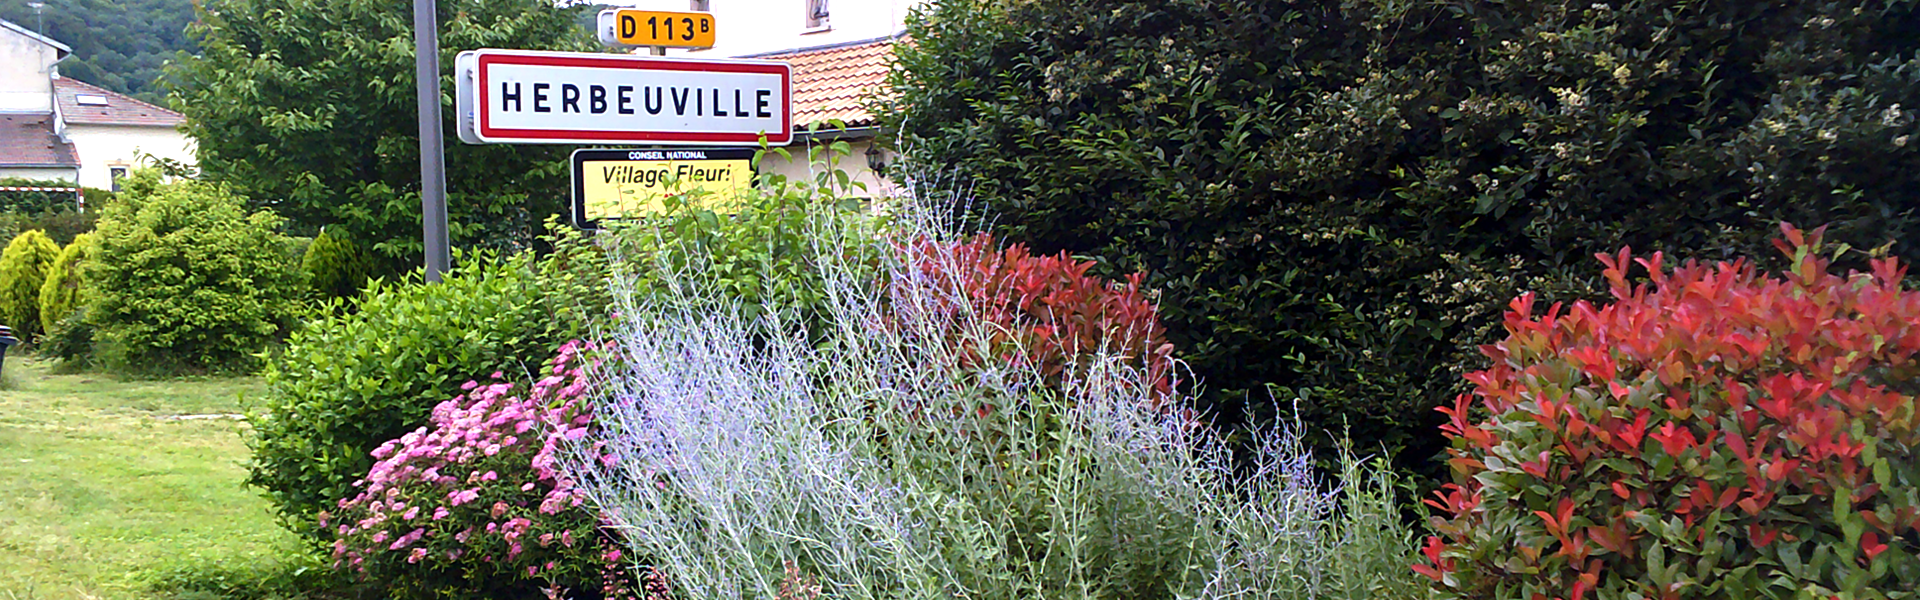 Accueil Commune de Herbeuville - Meuse